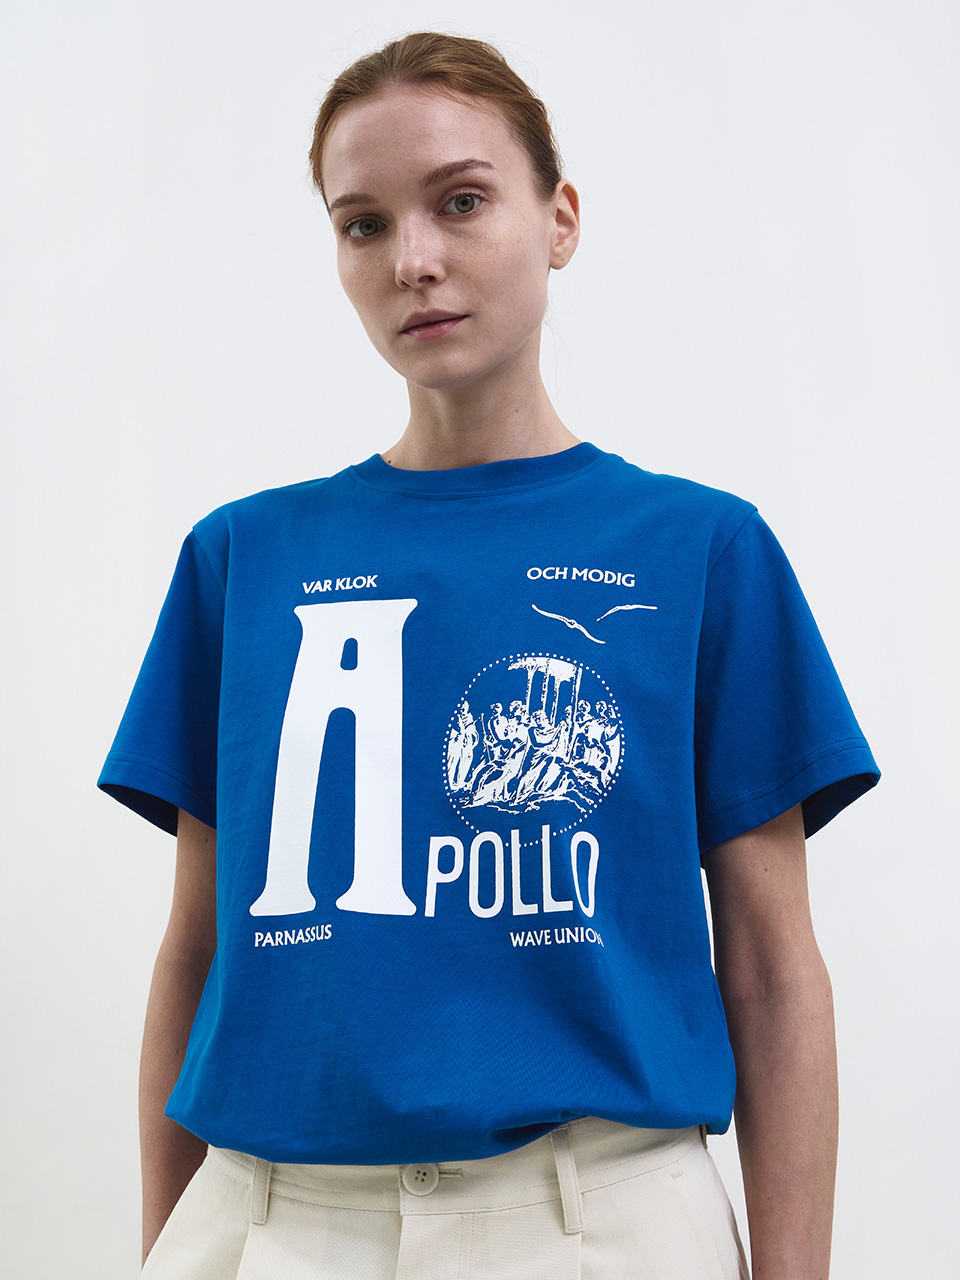 Apollo T-shirt blue